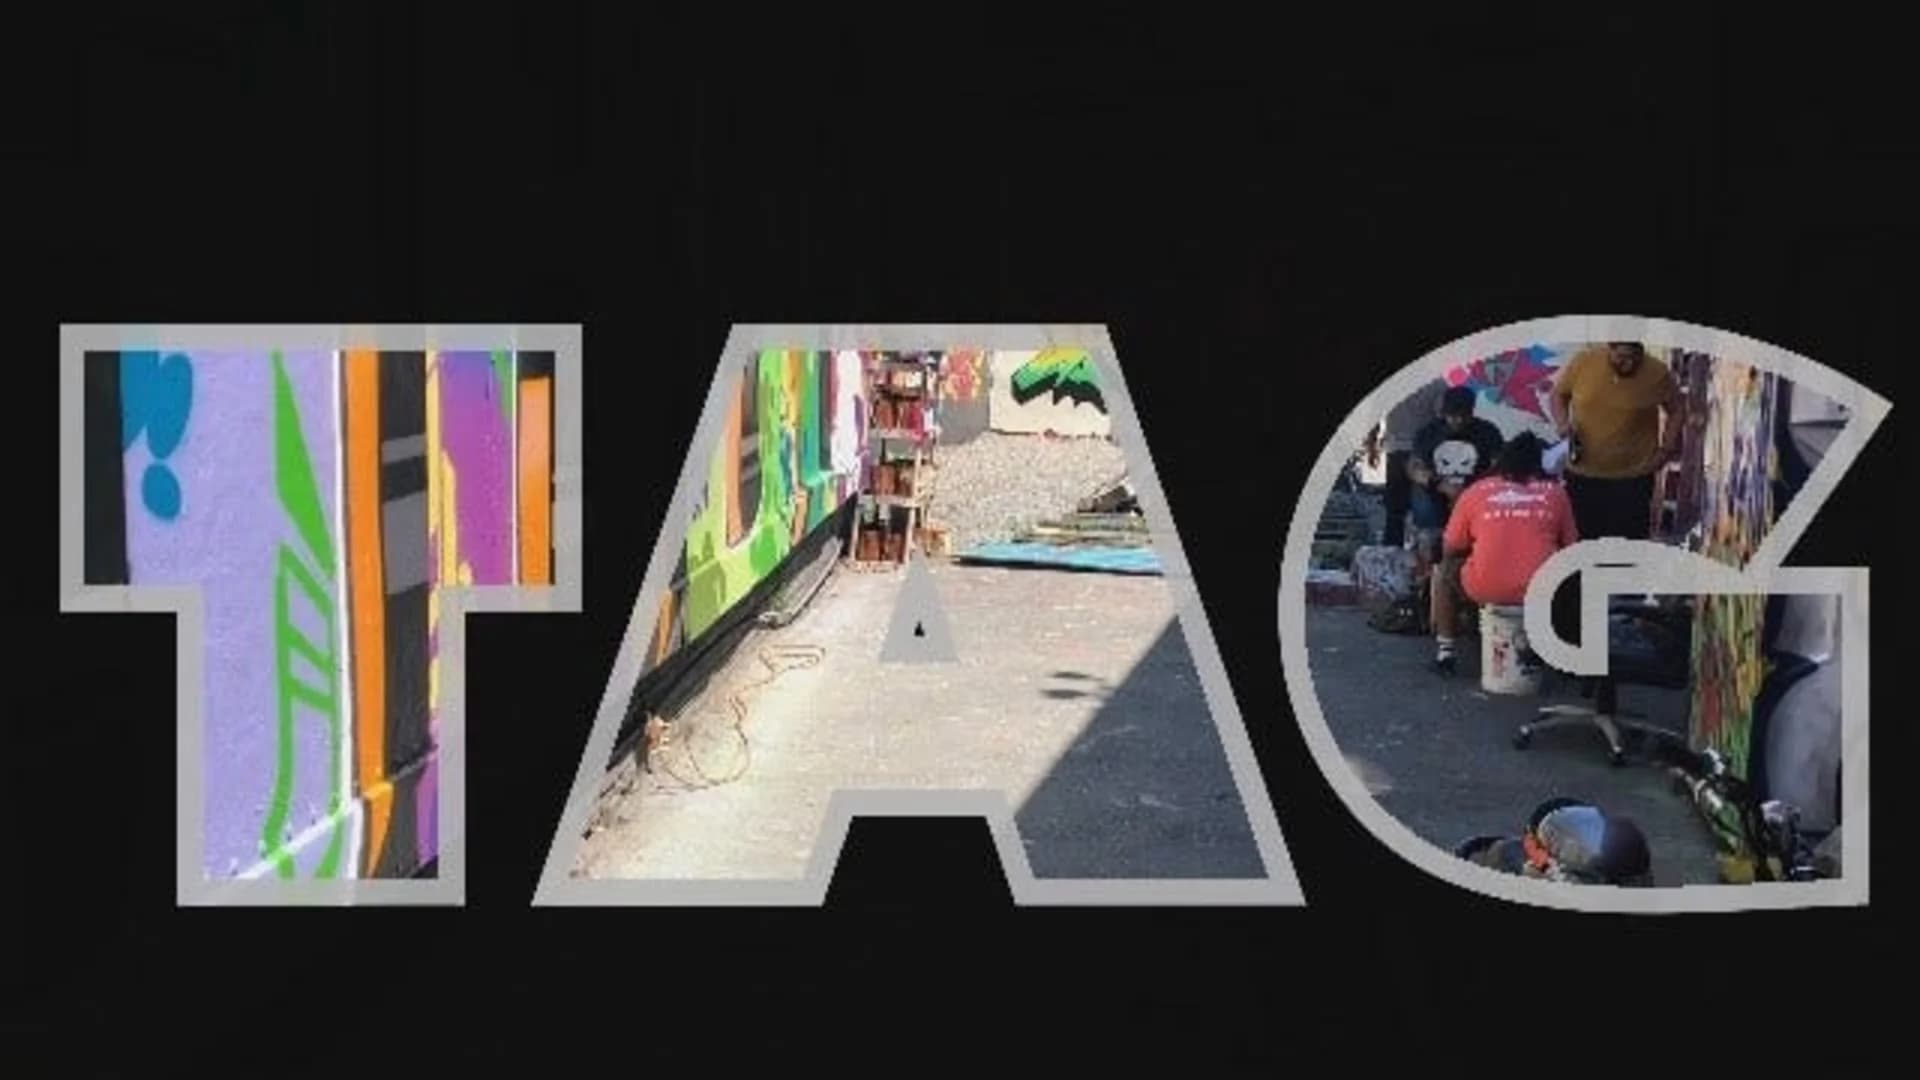 Graffiti tags spotlight artist's personality, experiences